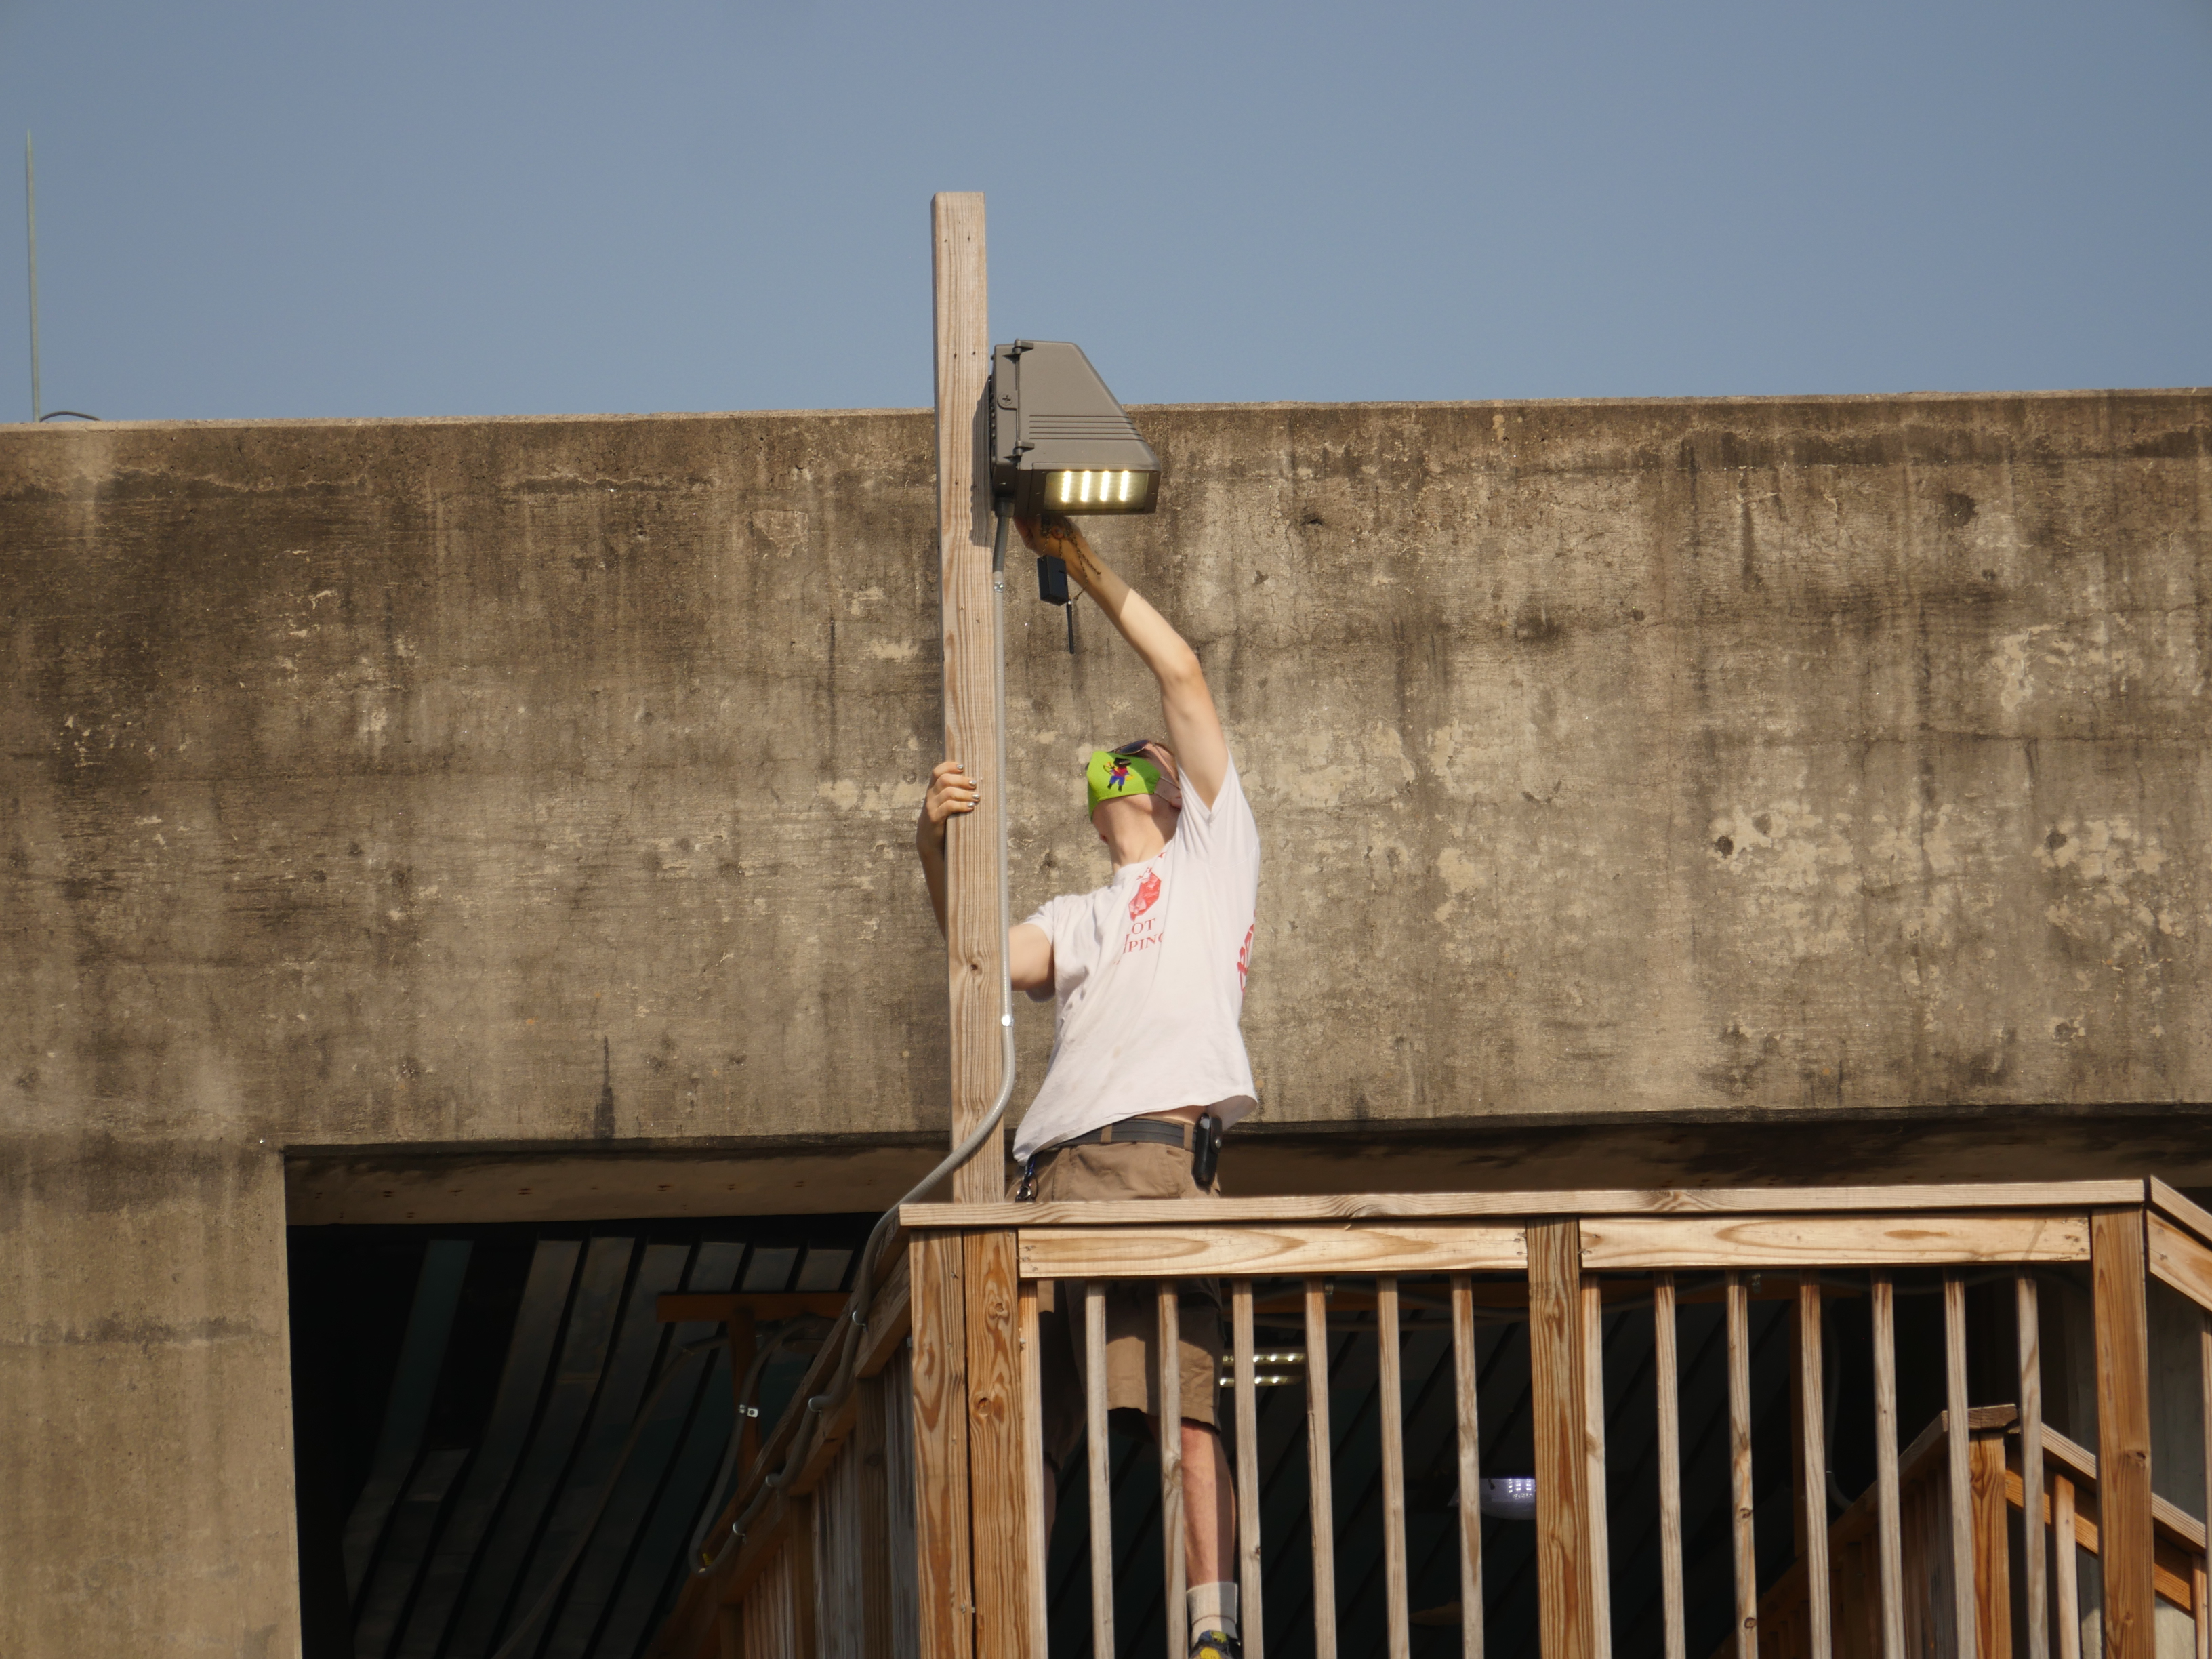 A volunteer affixes a mesh networking node to a light pole.